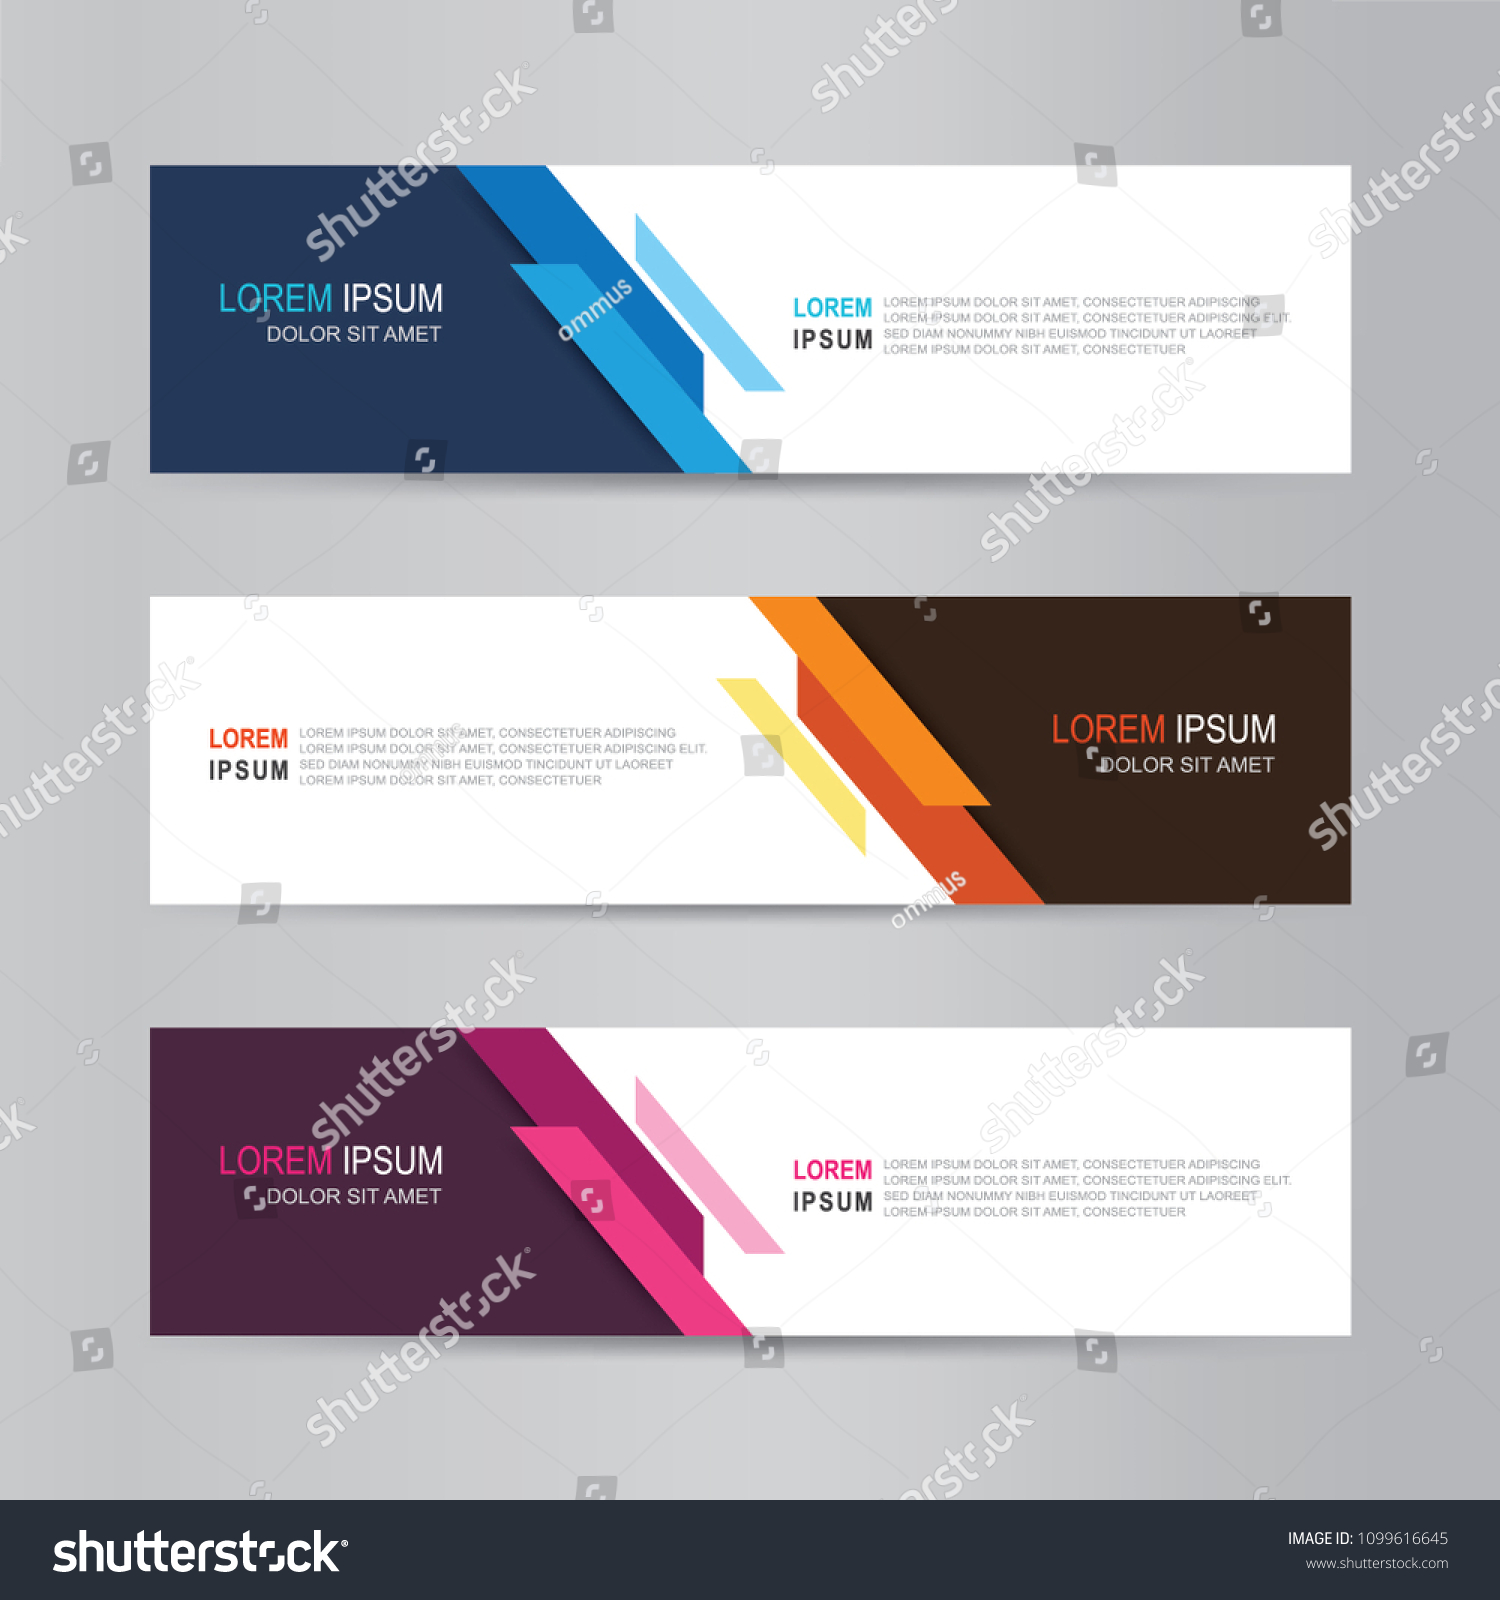 Vector abstract banner design. modern web template #1099616645